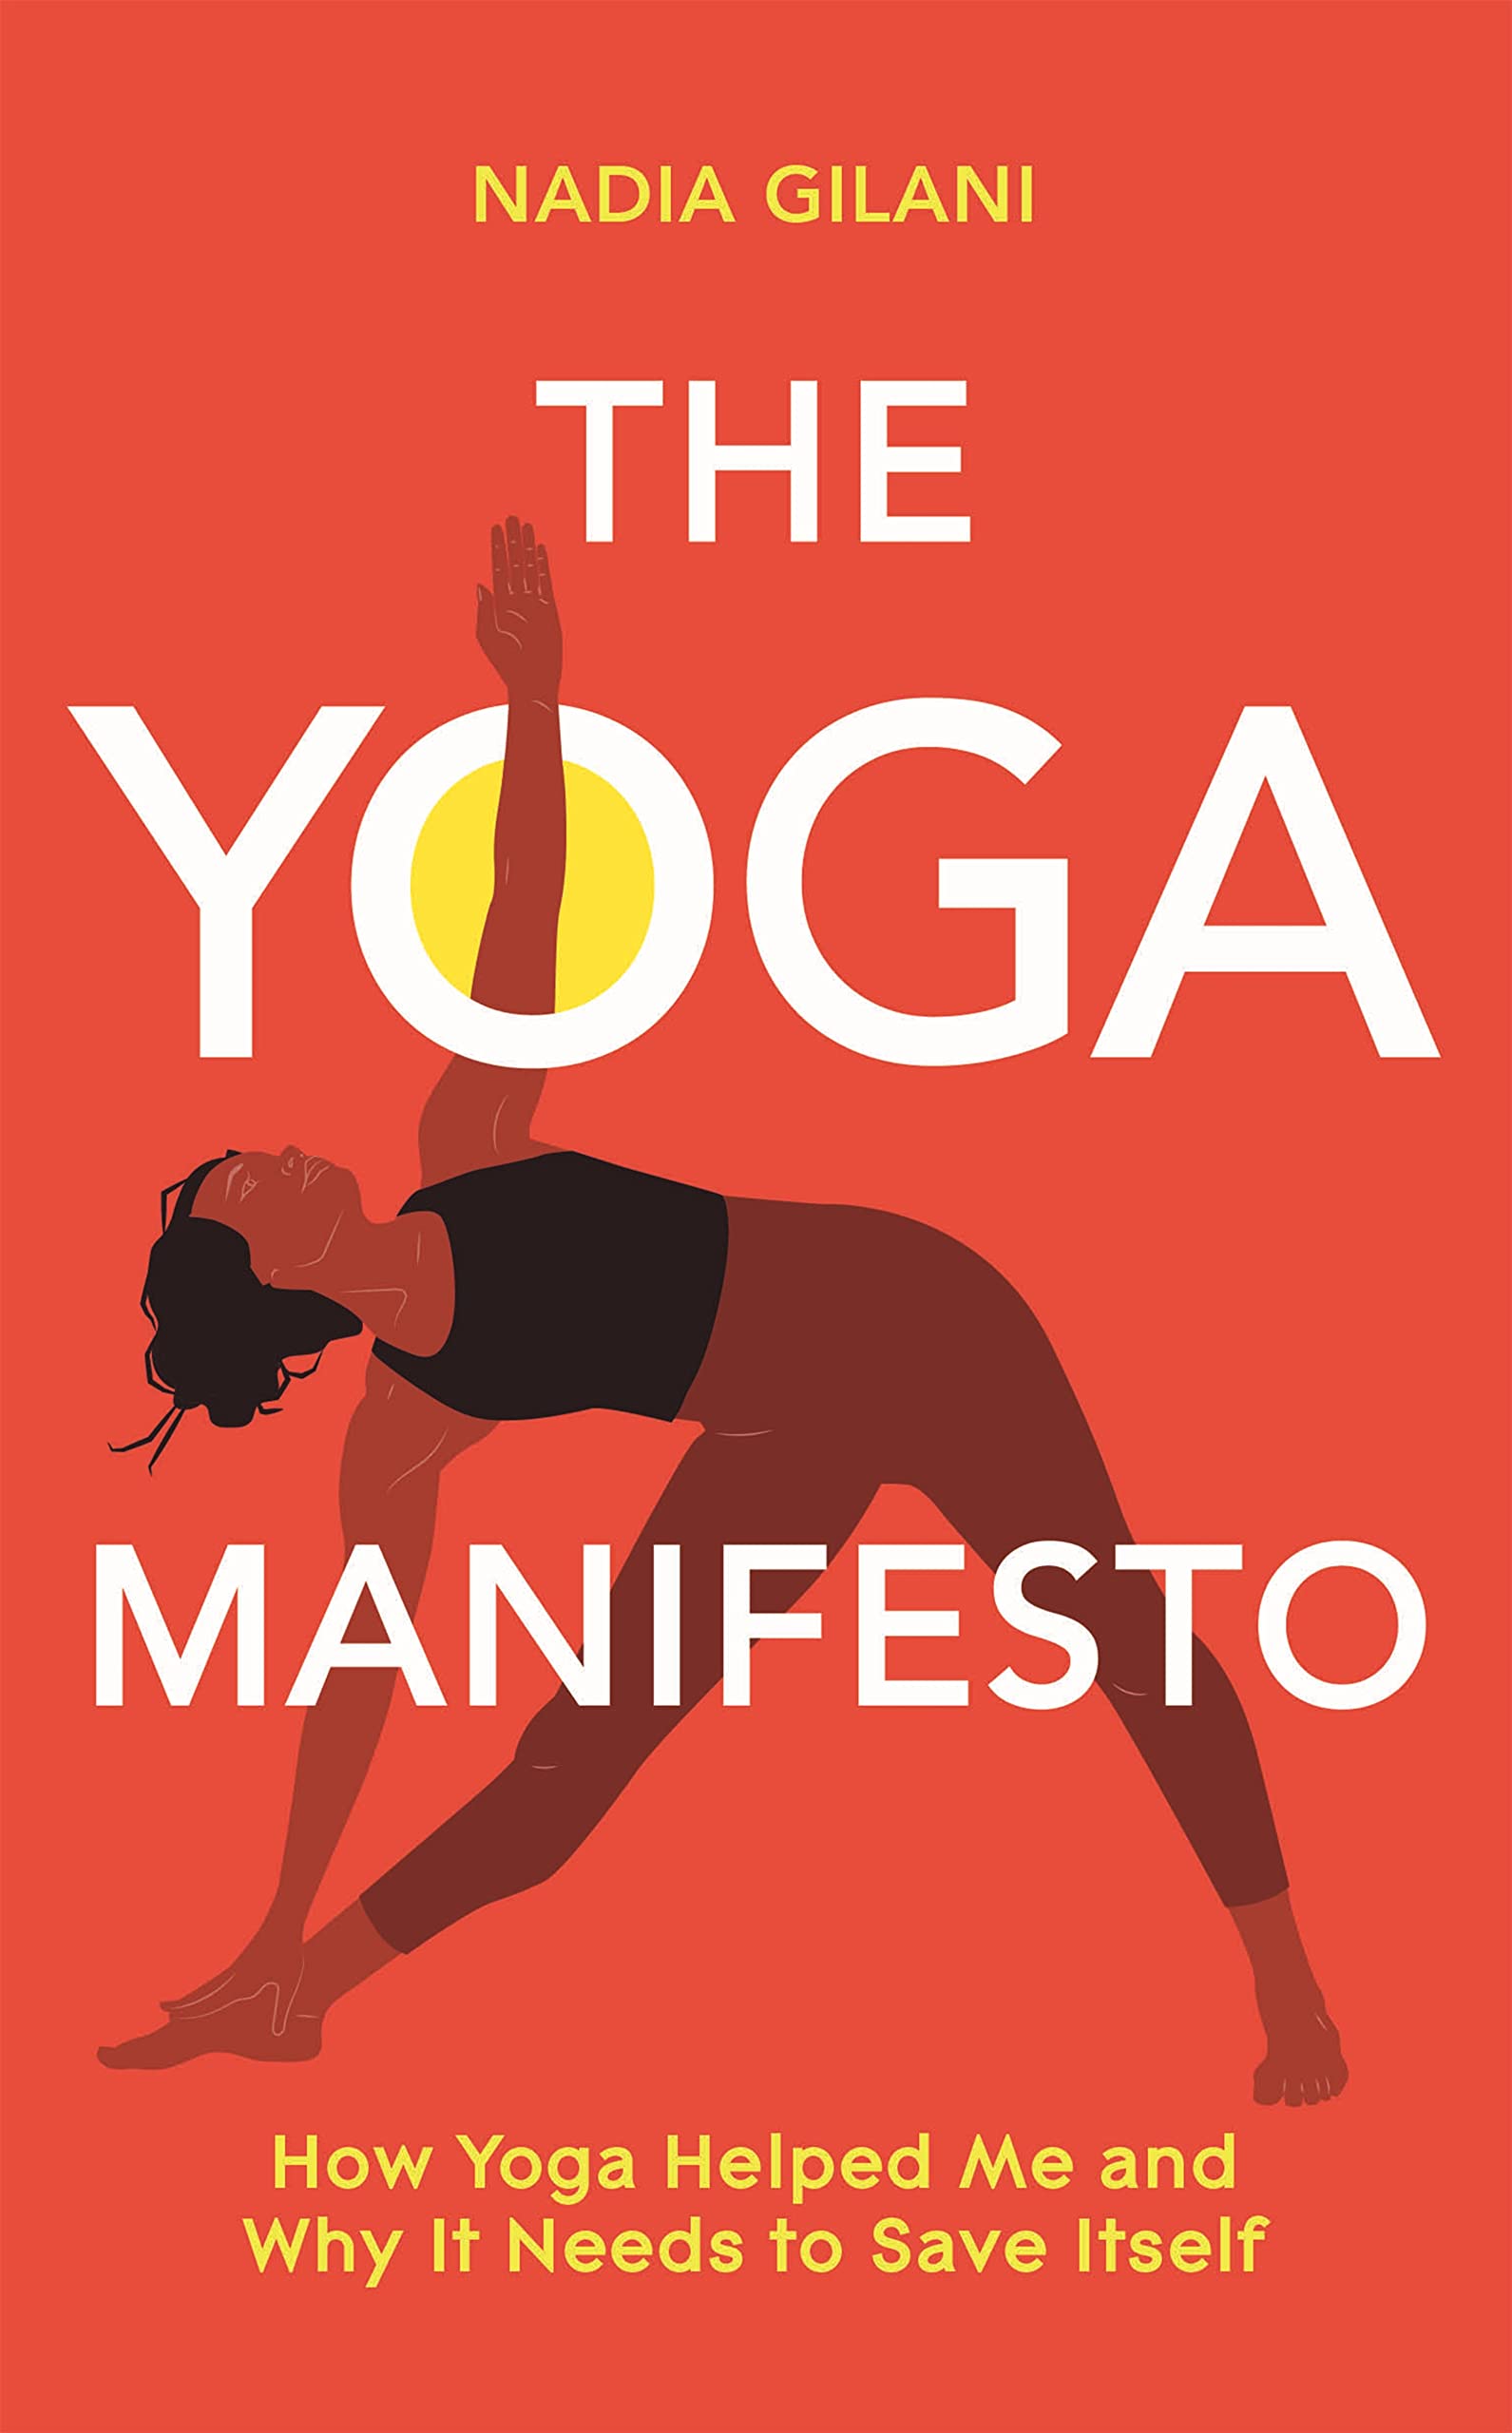 Nadia Gilani: The yoga manifesto